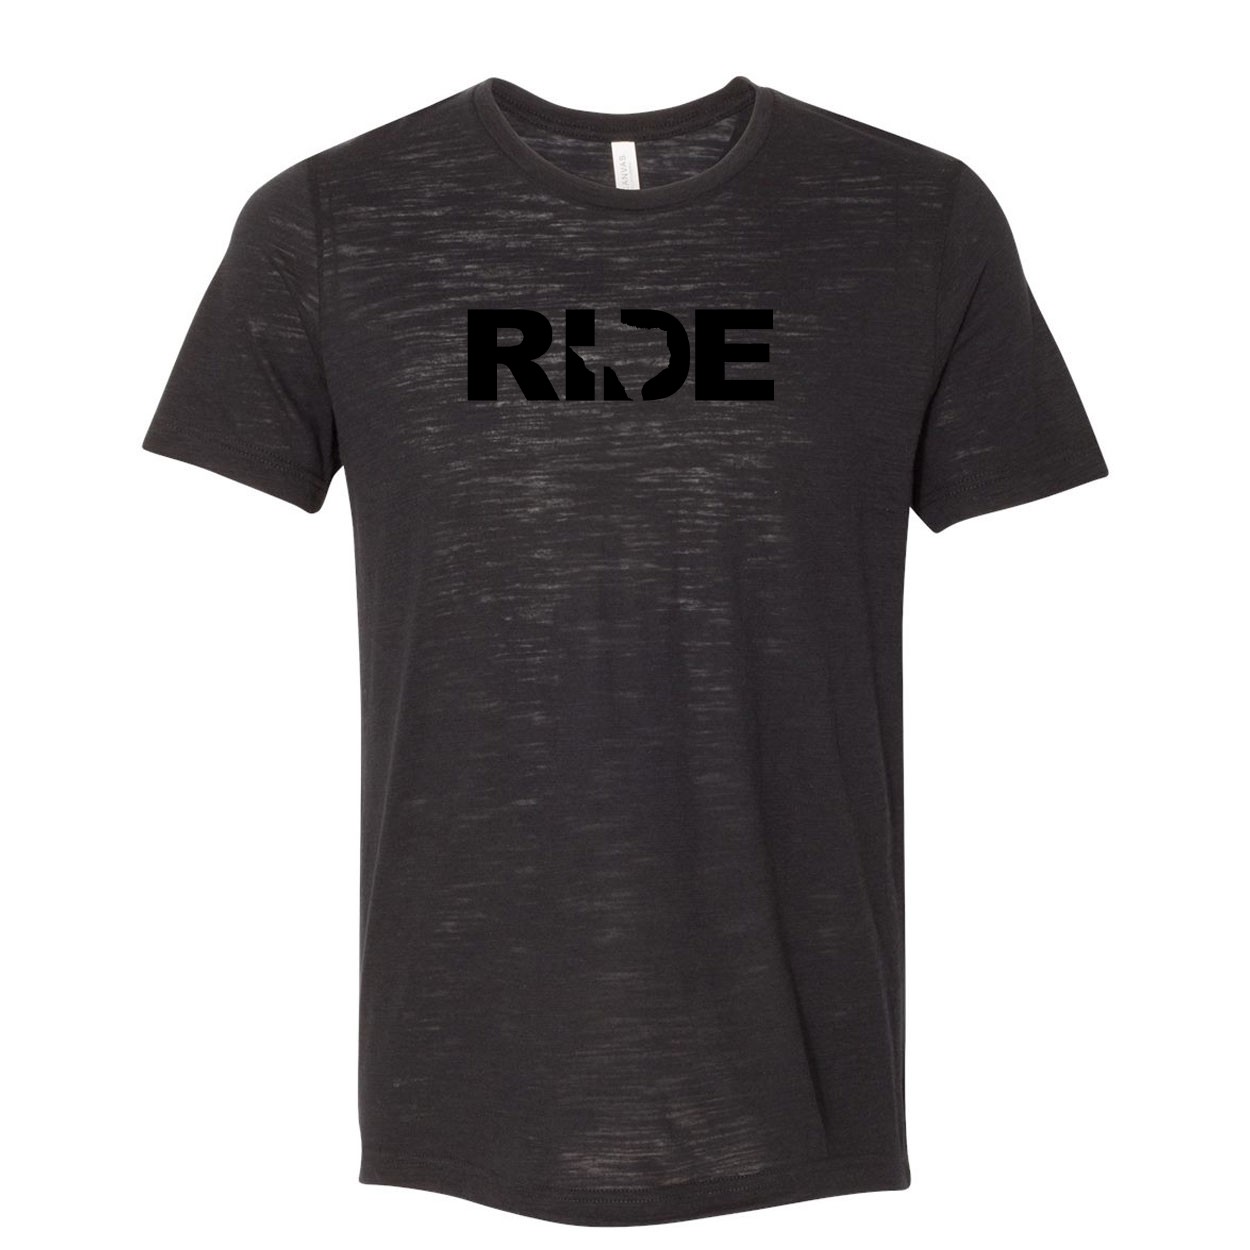 Ride Texas Classic Unisex Premium Texture T-Shirt Solid Black Slub (Black Logo)